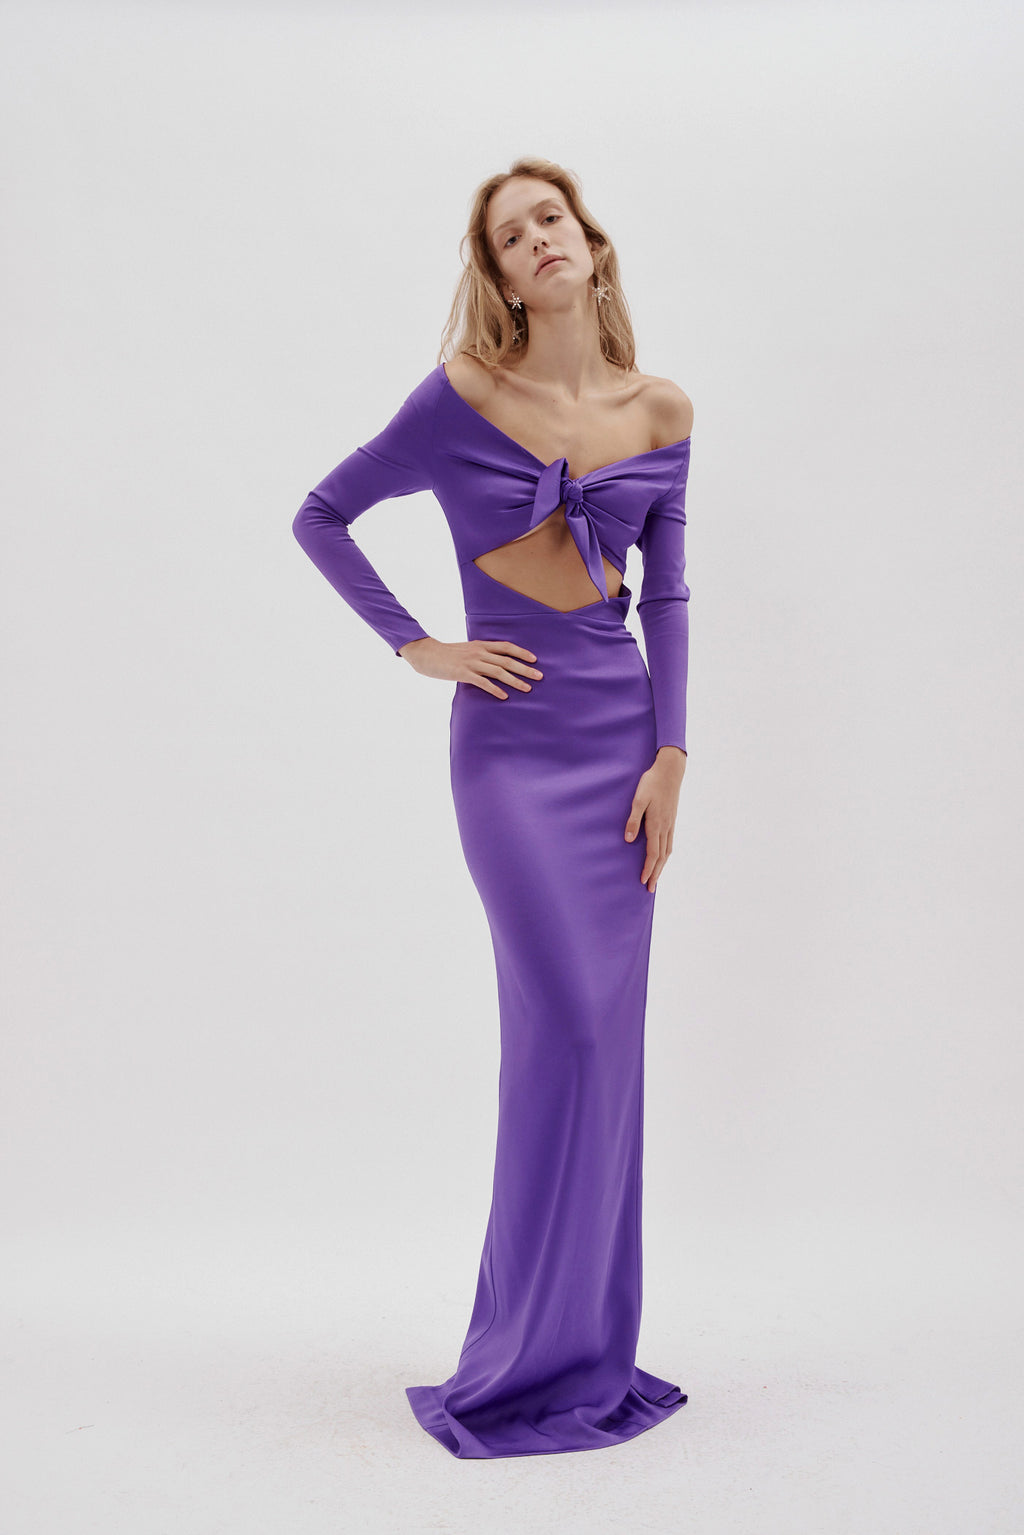 Lorne Purple Dress